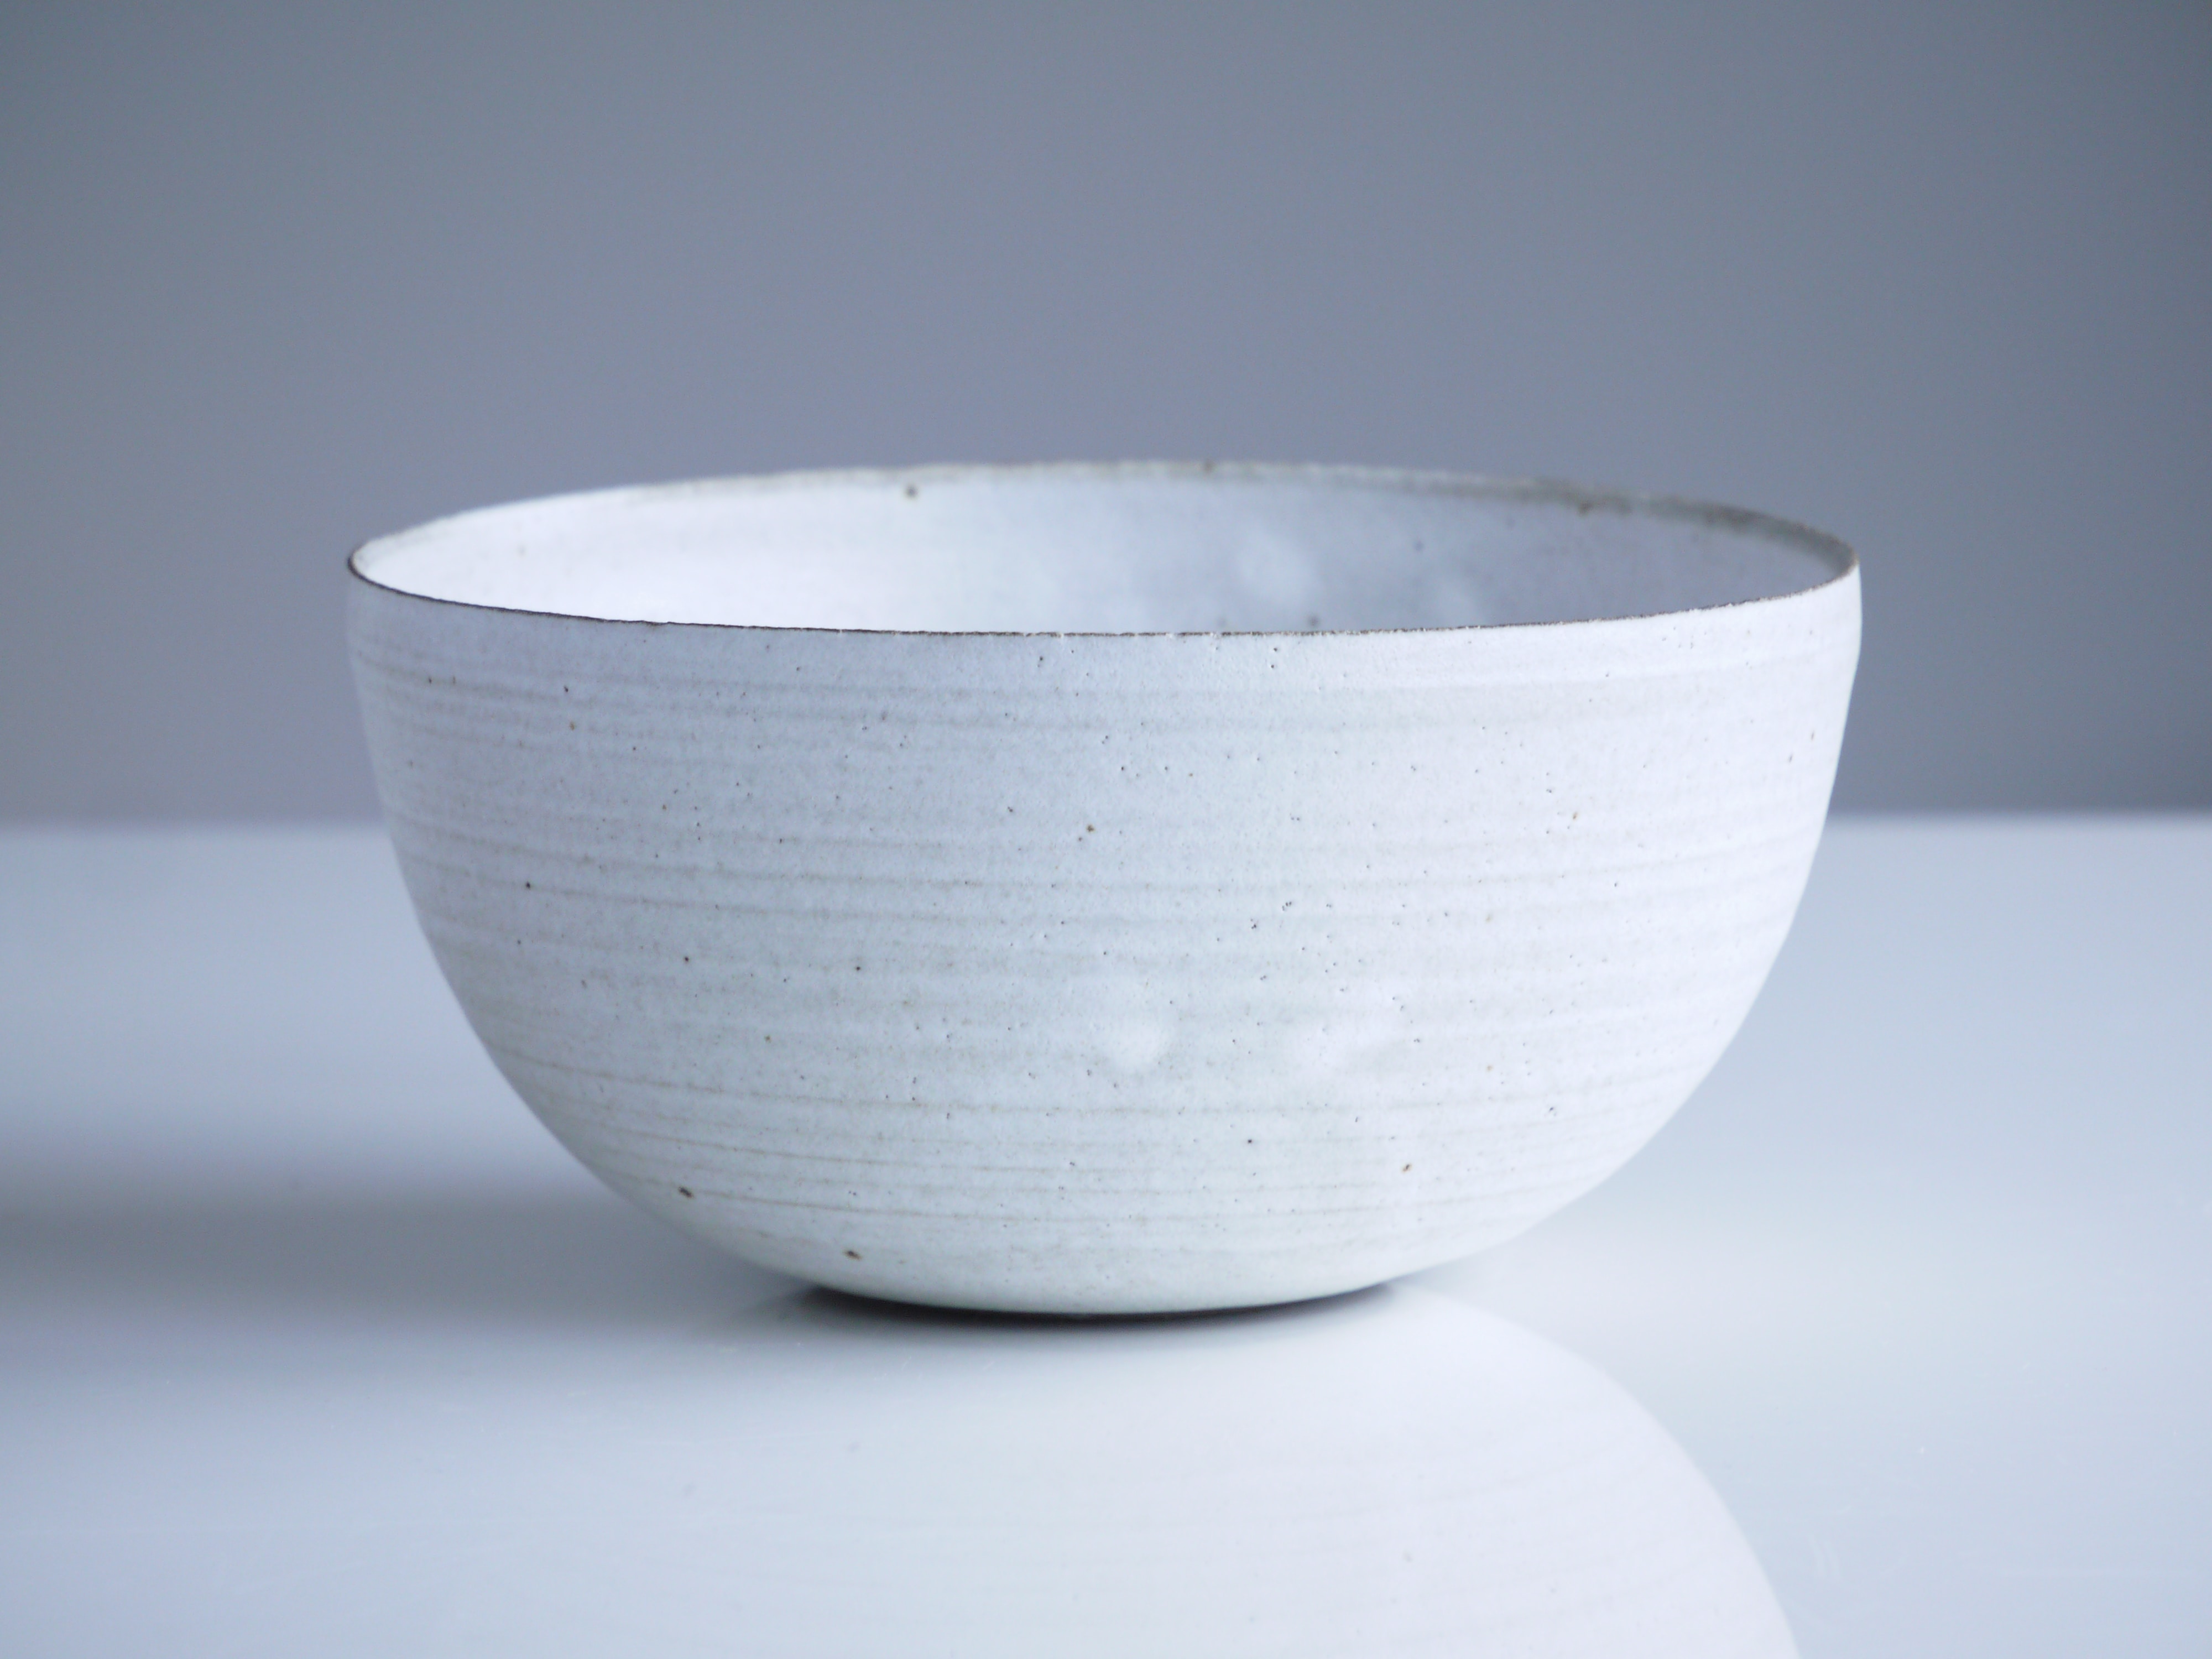 Closeup of a white bowl on a white table.